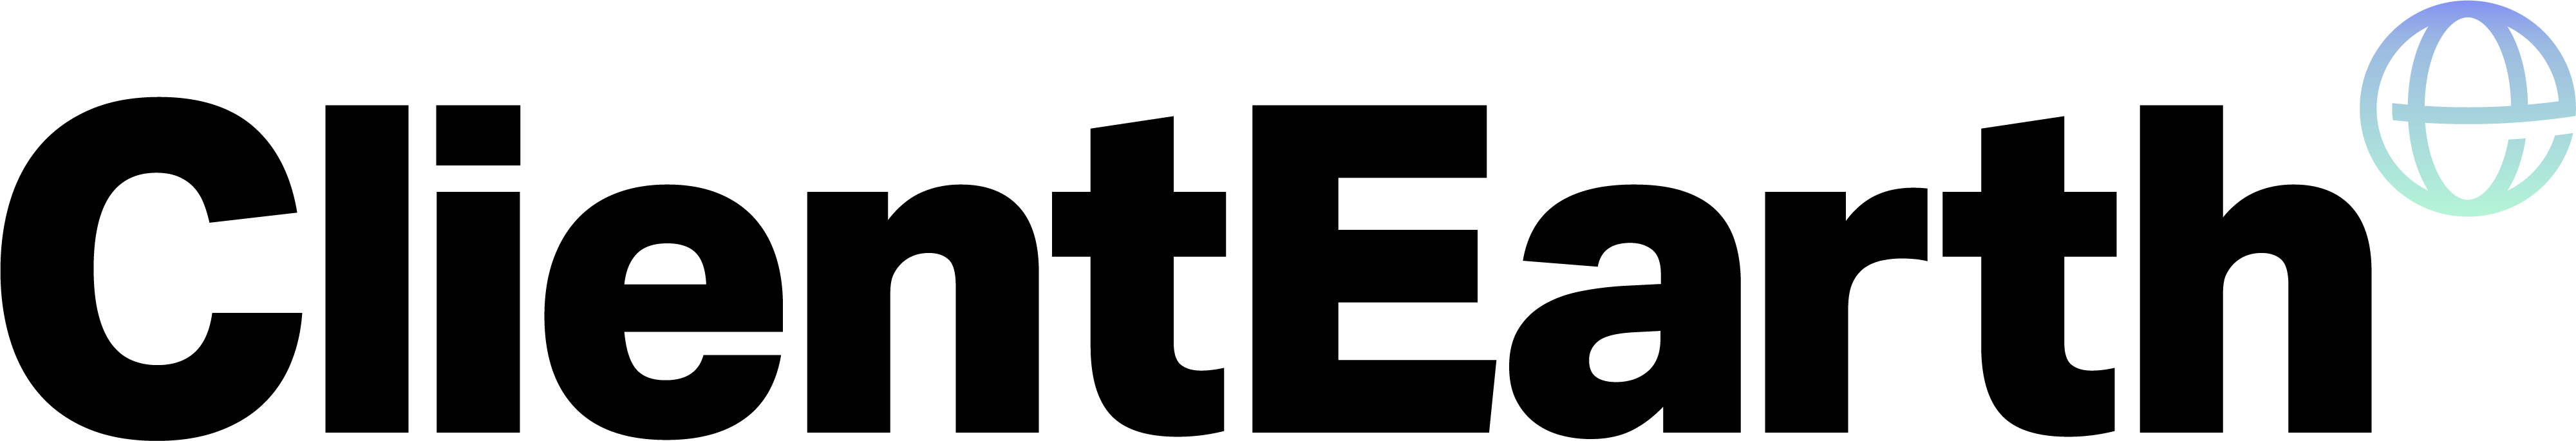 Client Earth logo